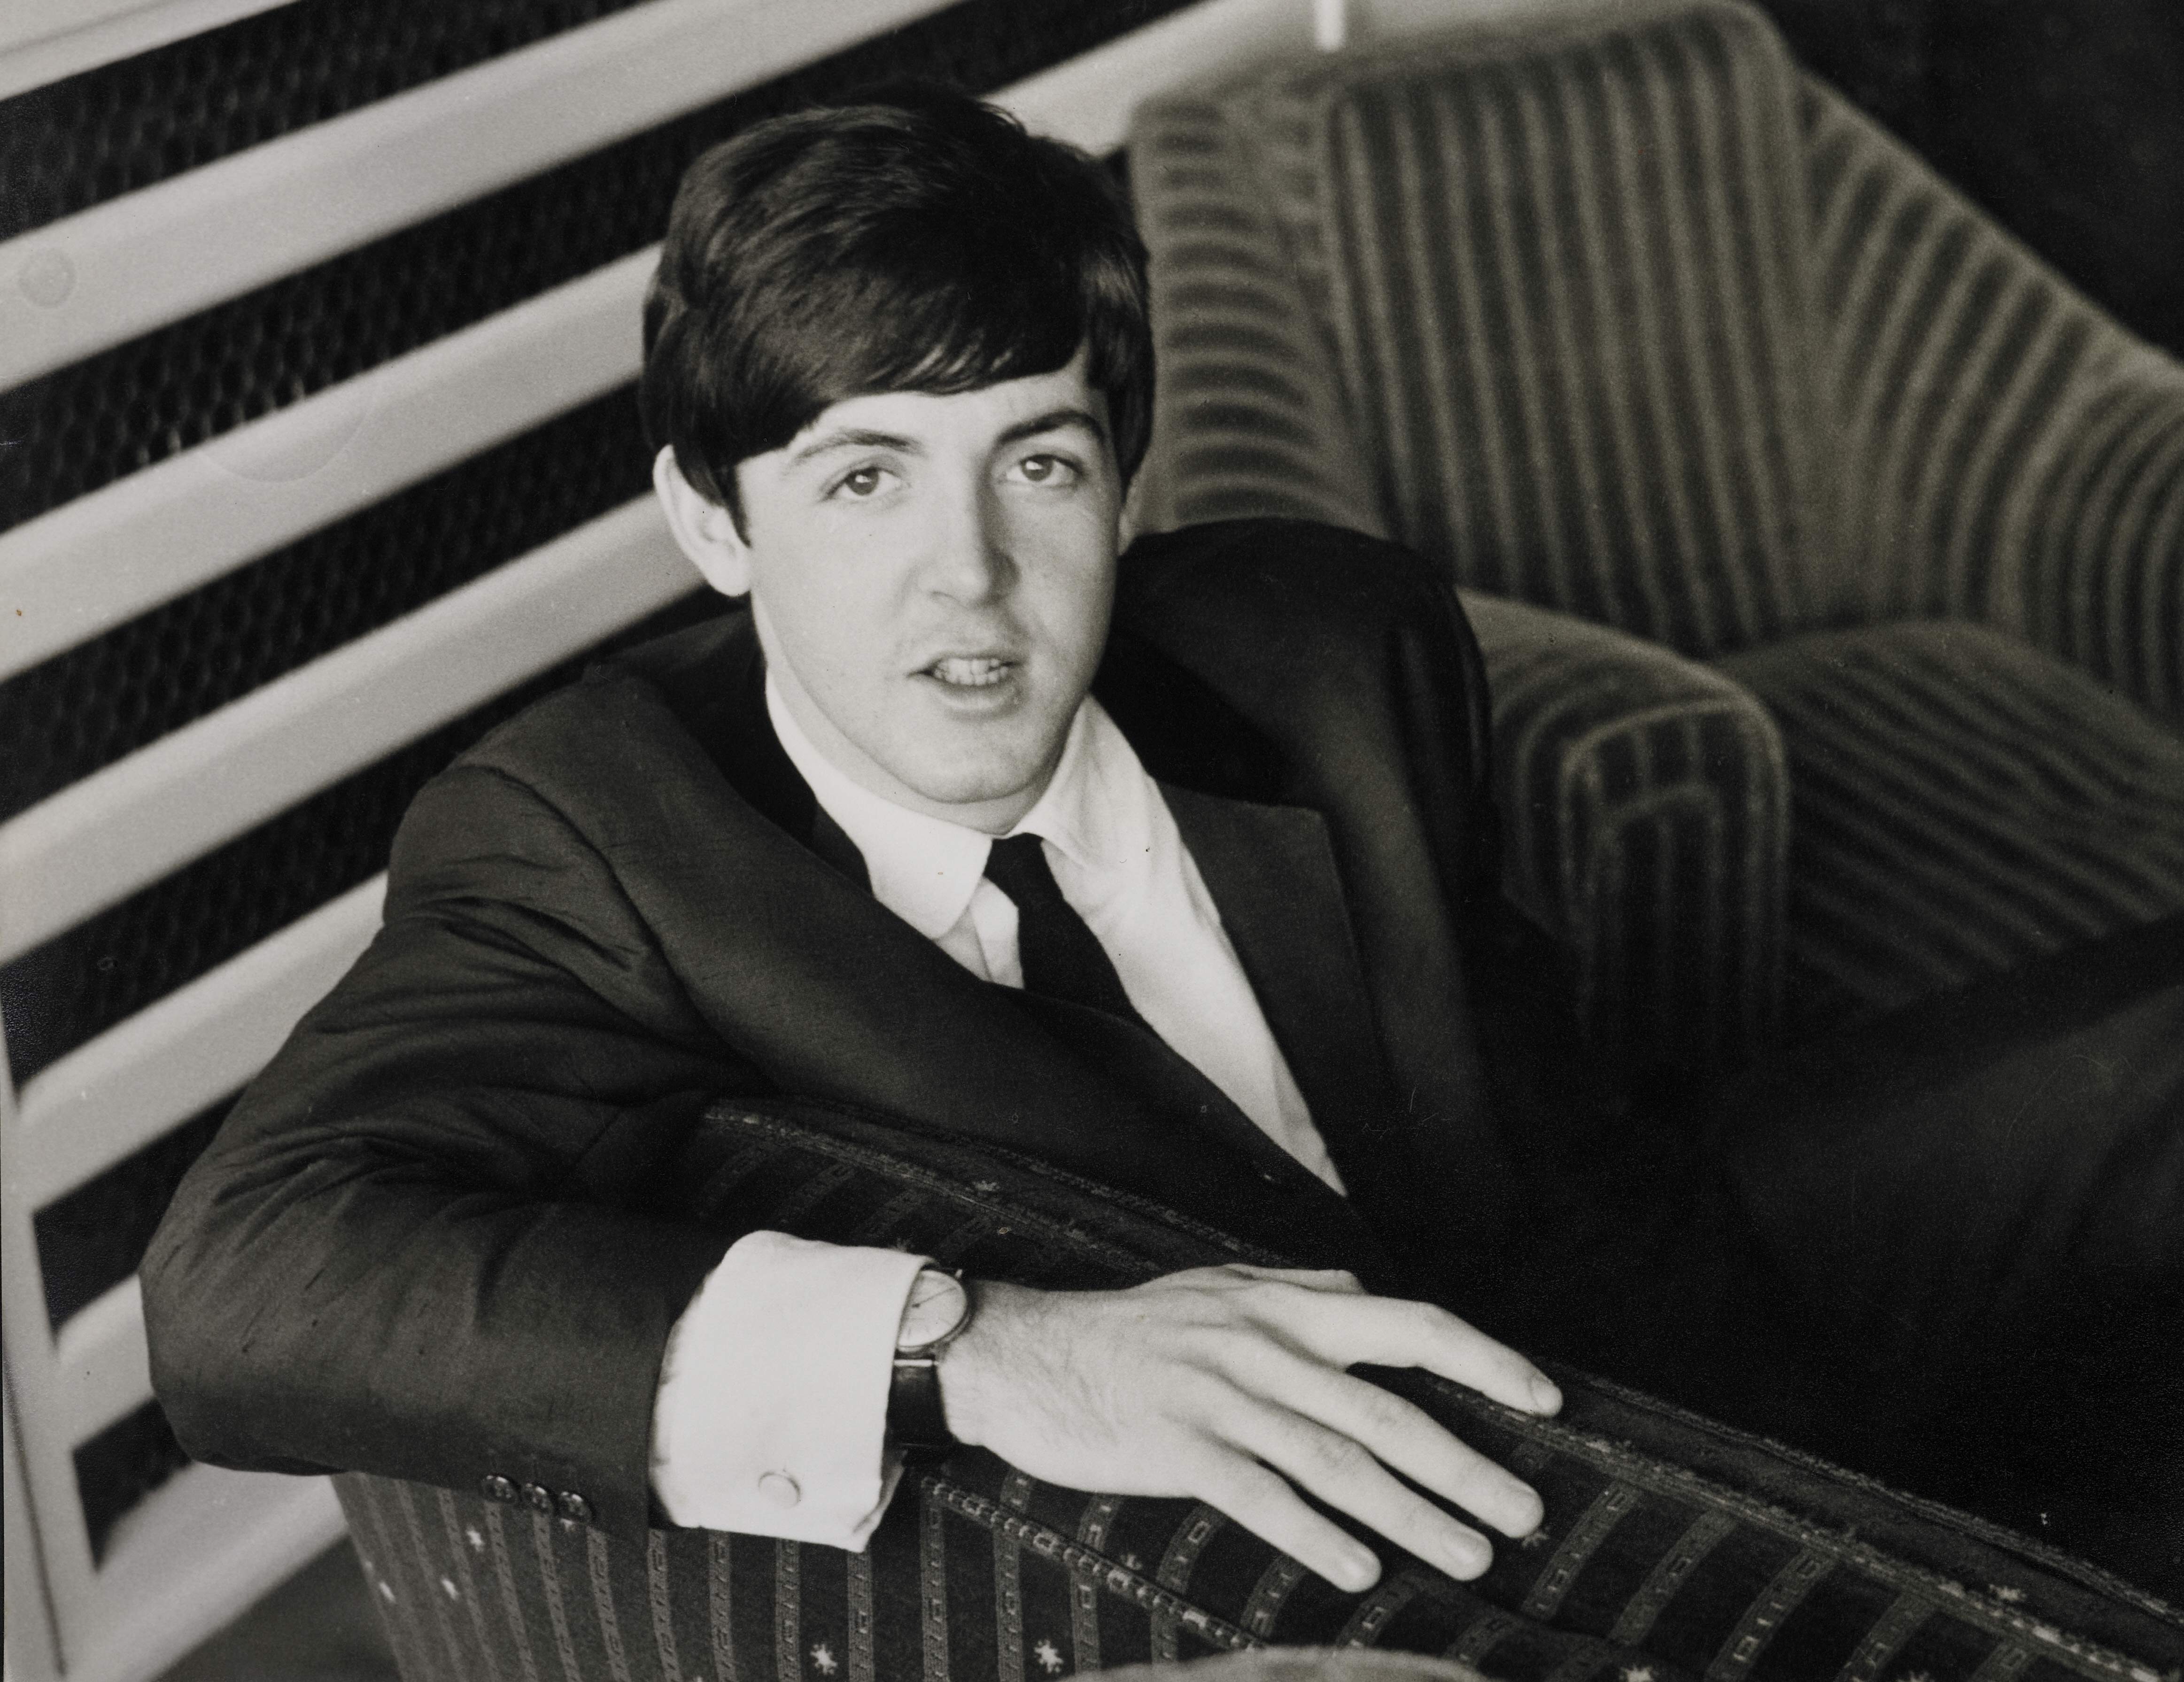 The Beatles' Paul McCartney on a couch